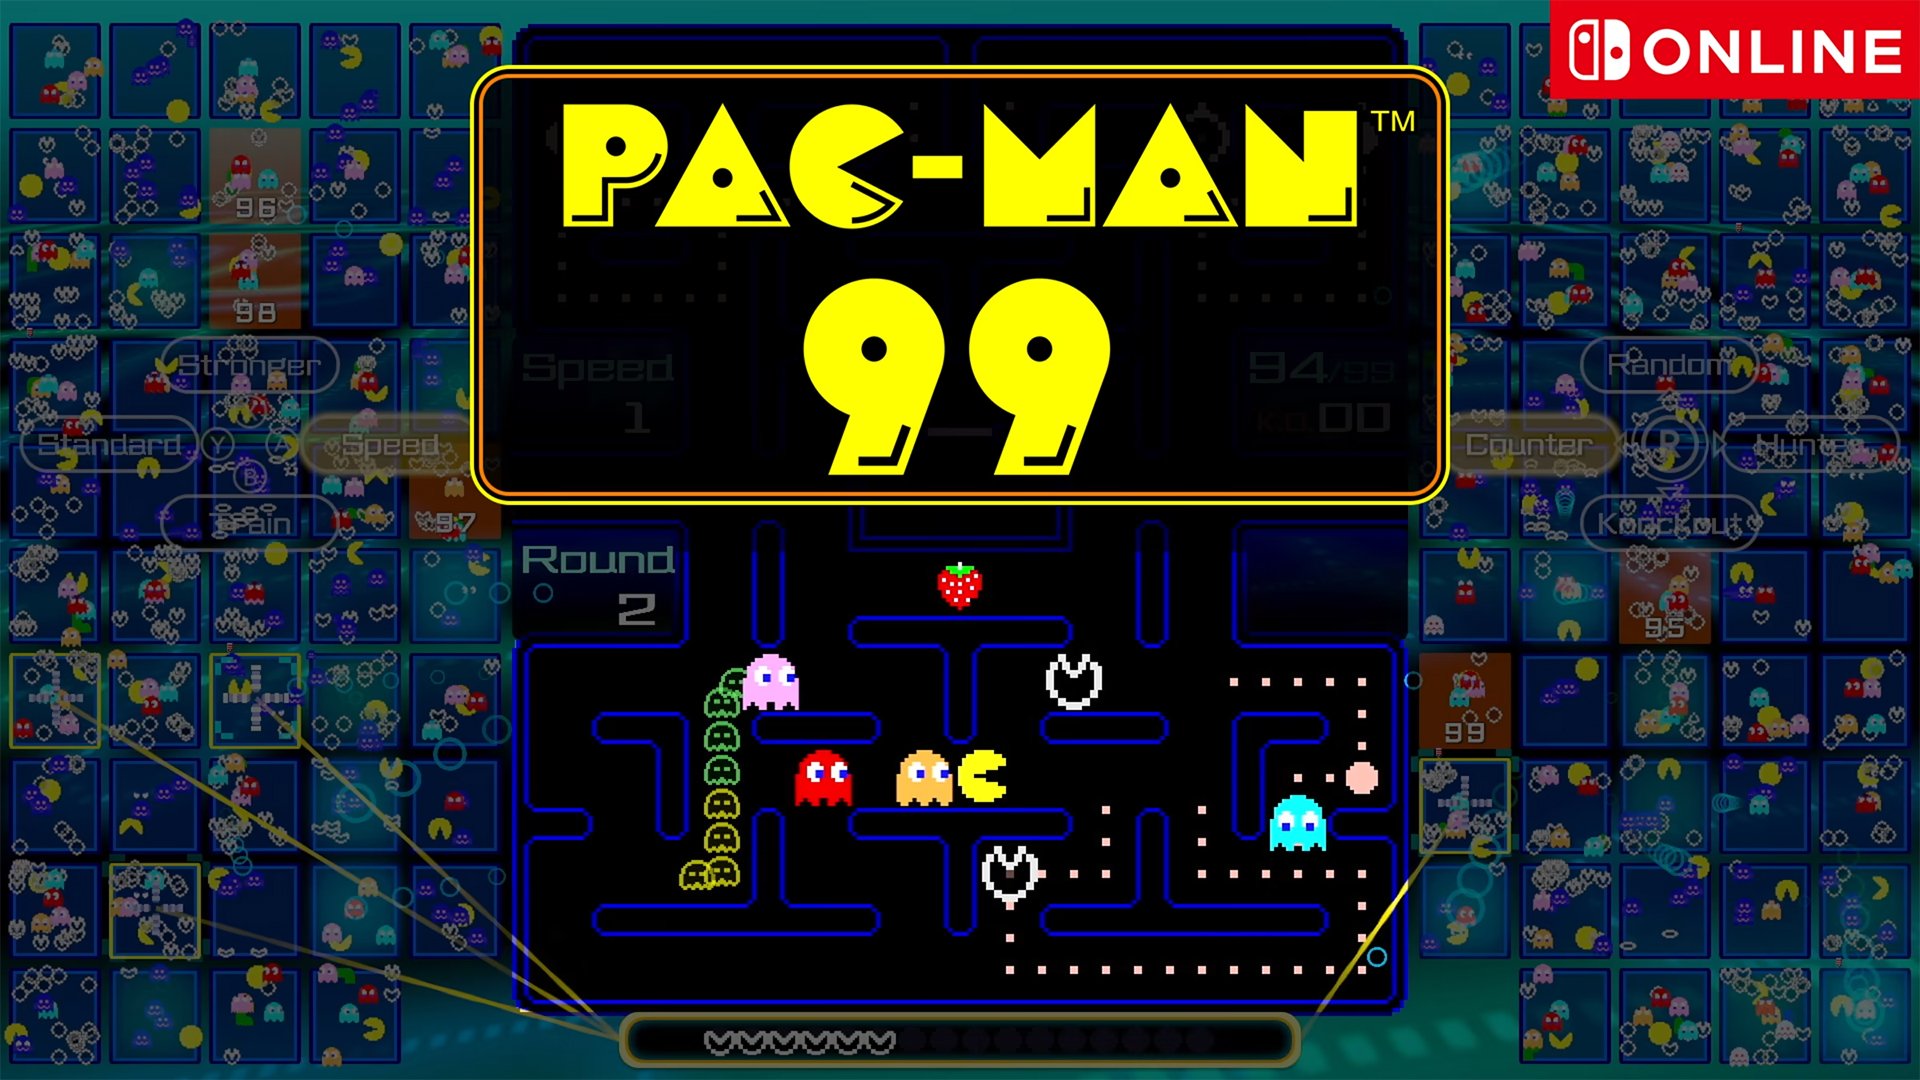 Pac-Man 99 will be shutting down : r/RememberTheGame